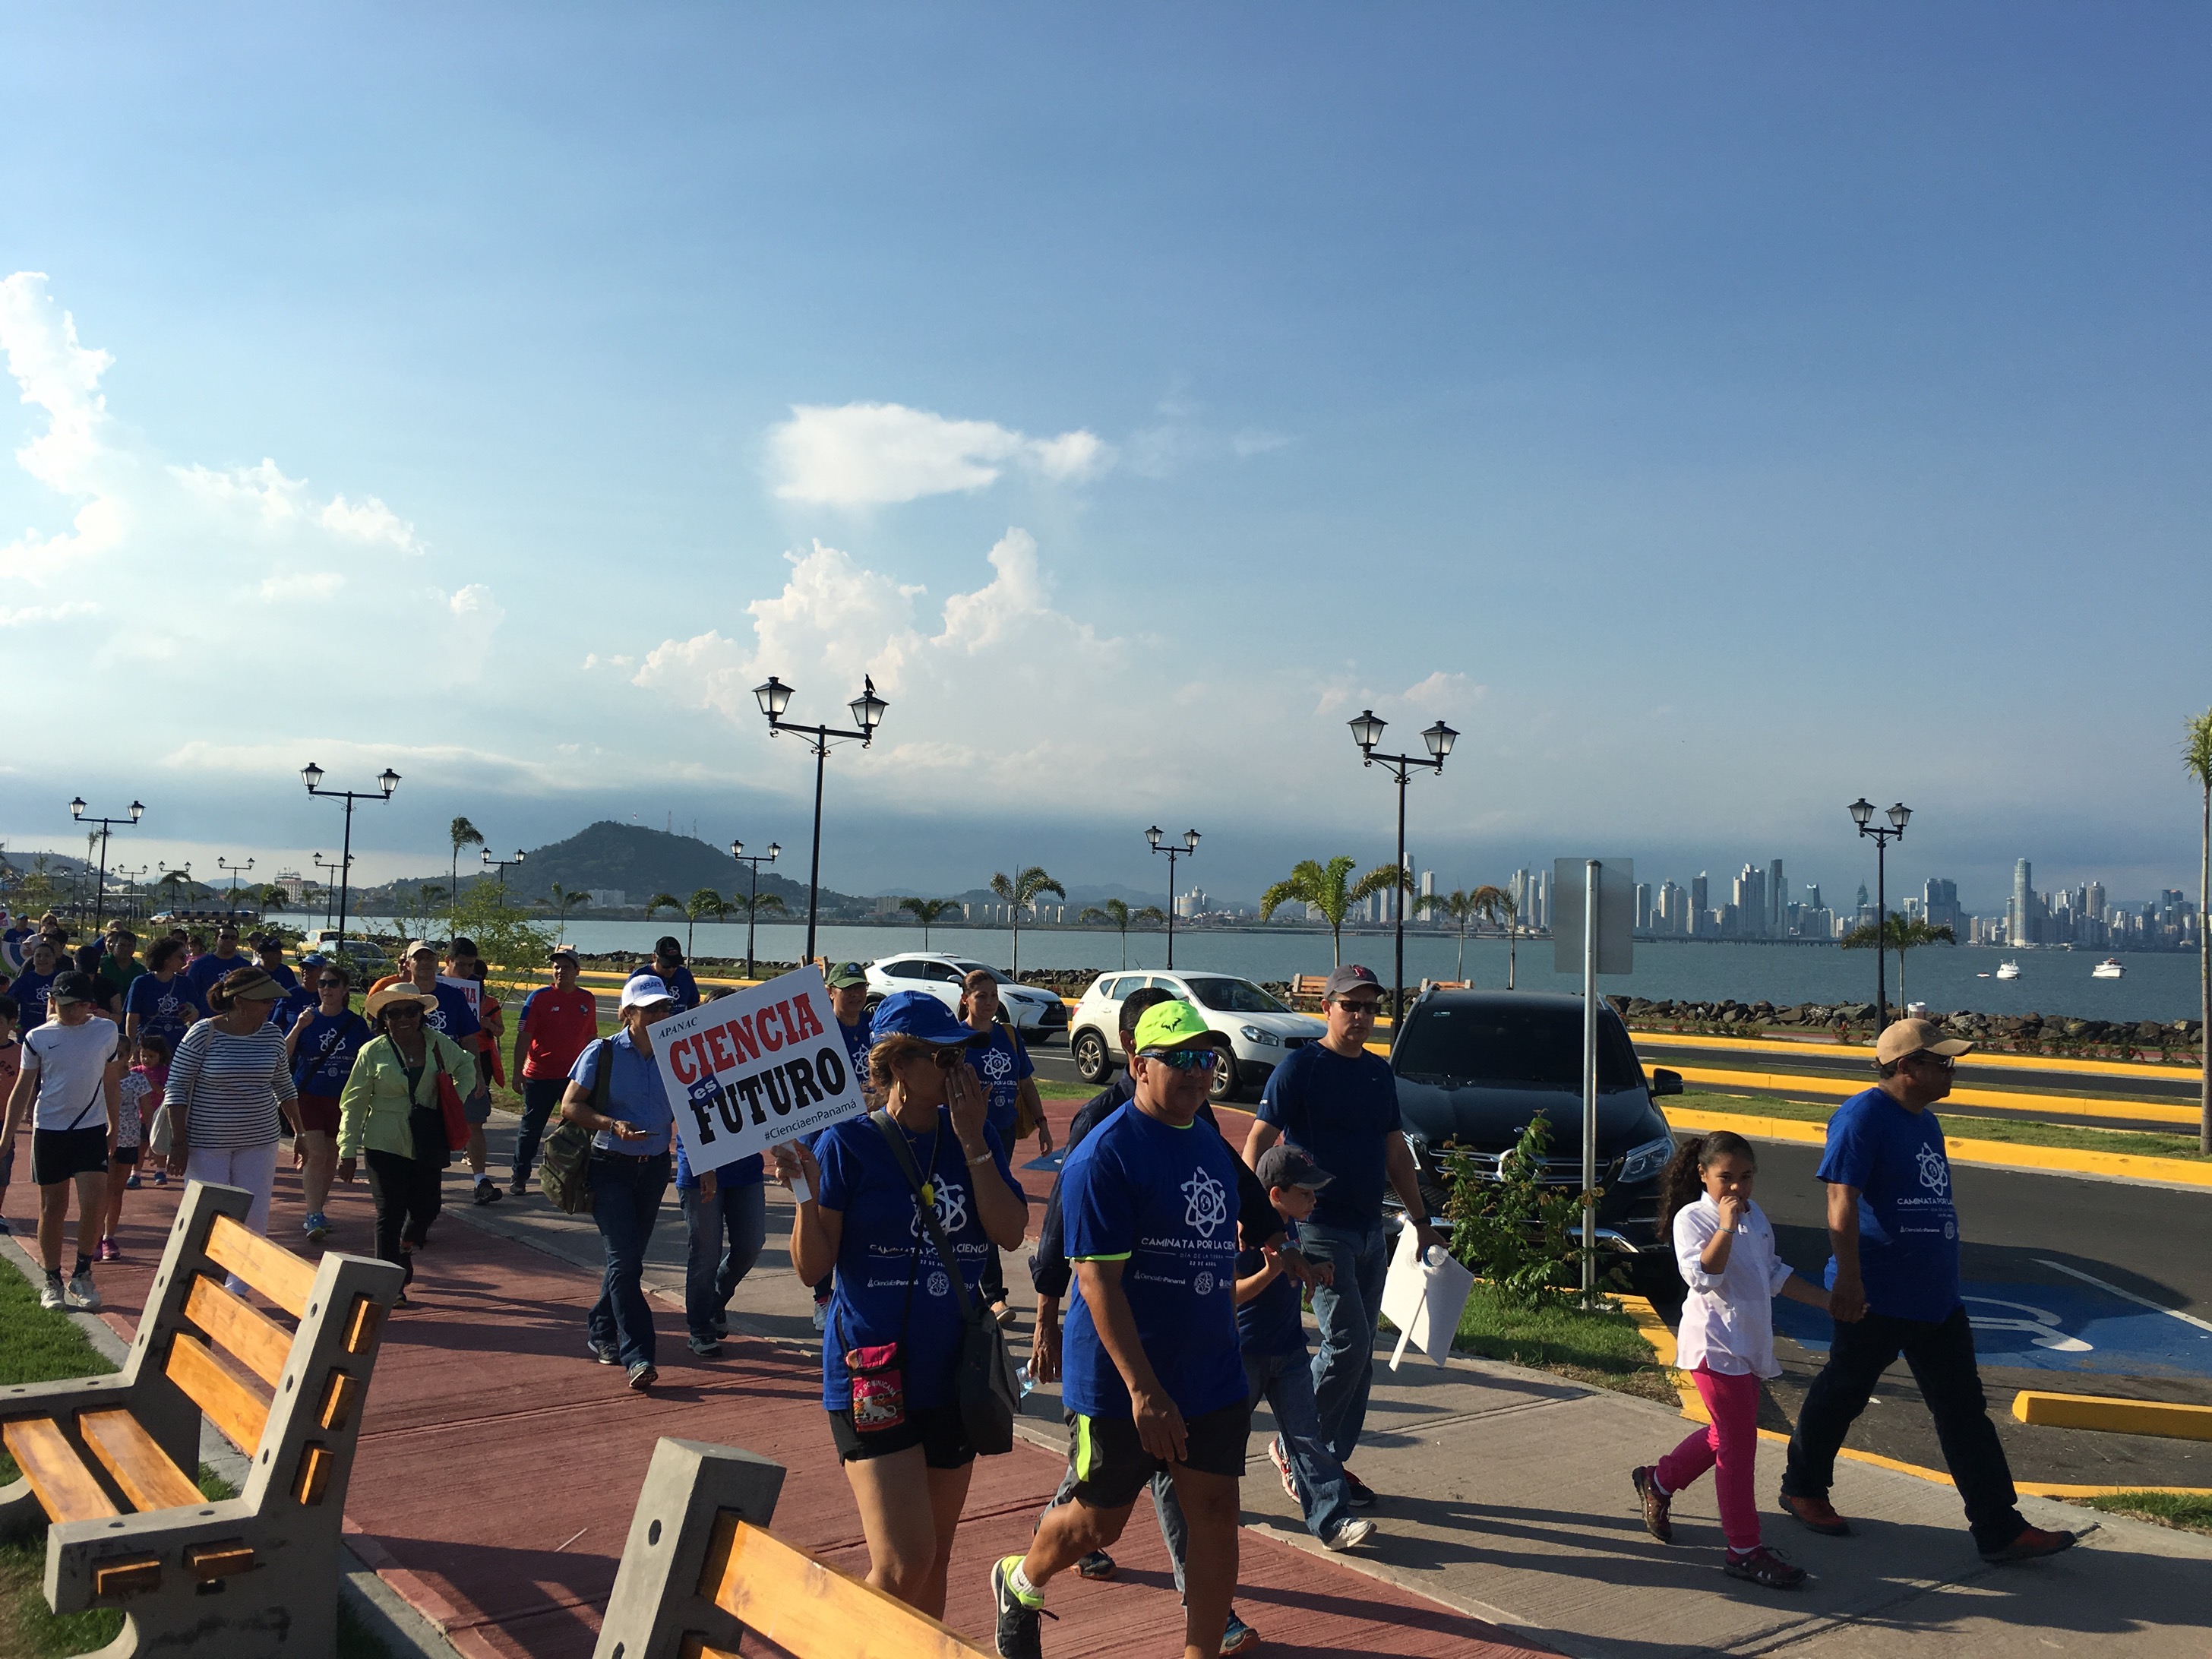 People walking together during the Caminata por la Ciencia on Amador Causeway, Panama City, Panama.